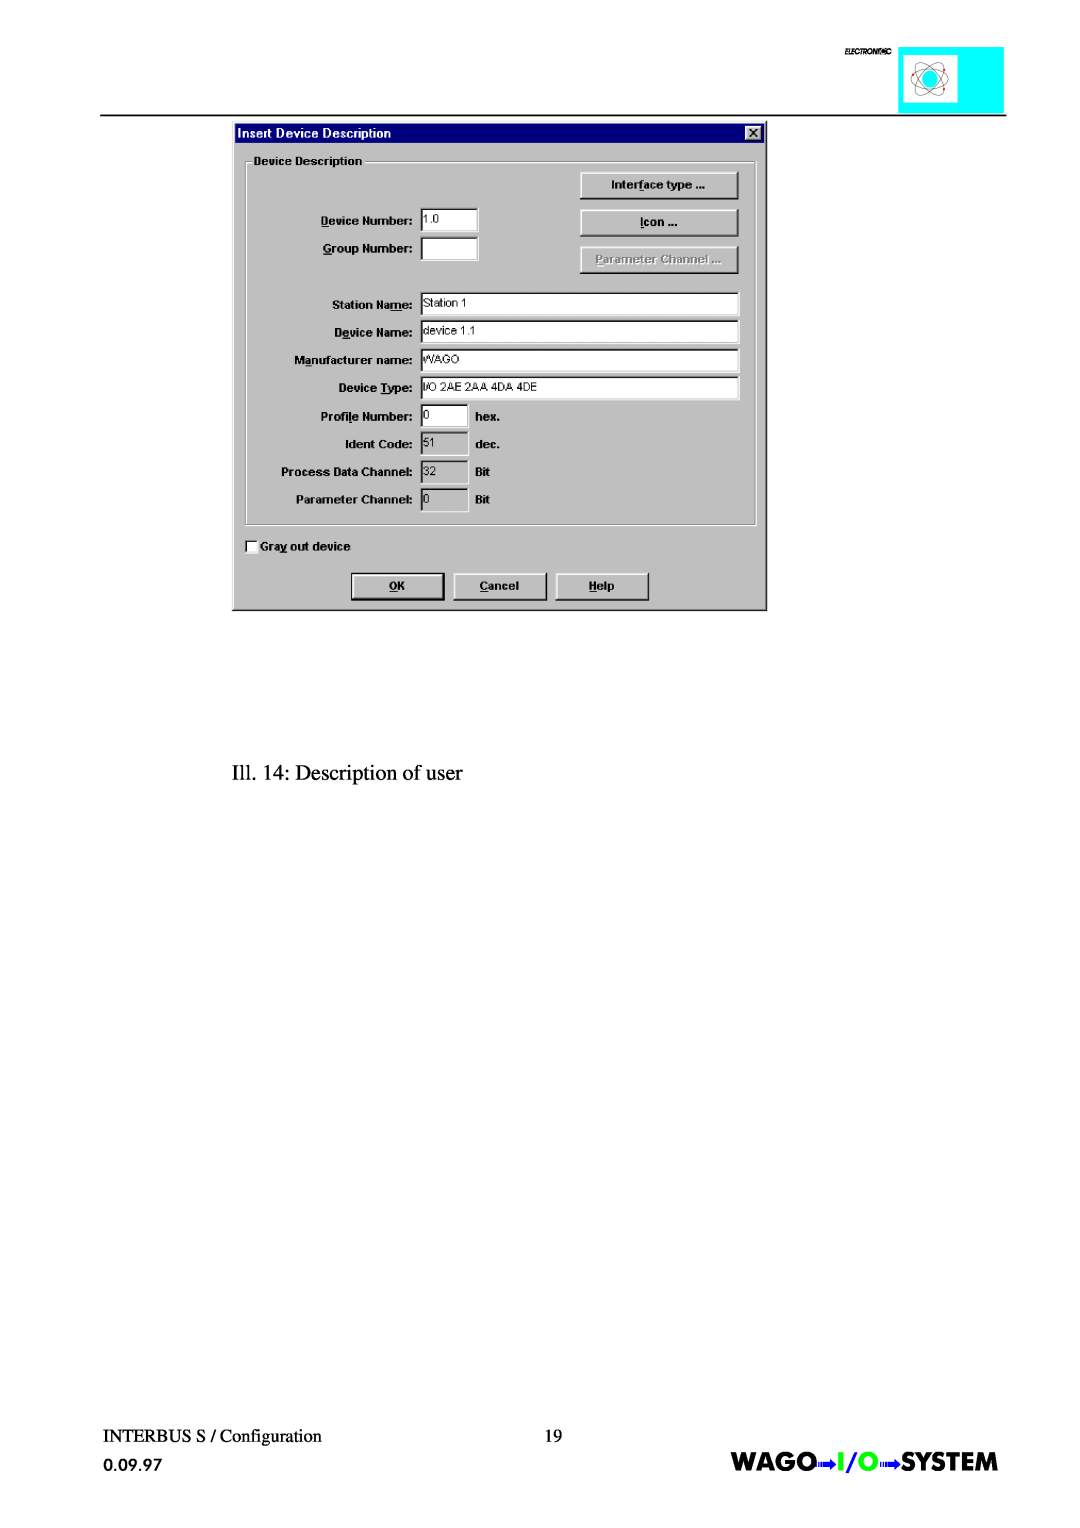 Quatech manual Ill. 14 Description of user, INTERBUS S / Configuration, $*2Ç,2Ç6670 